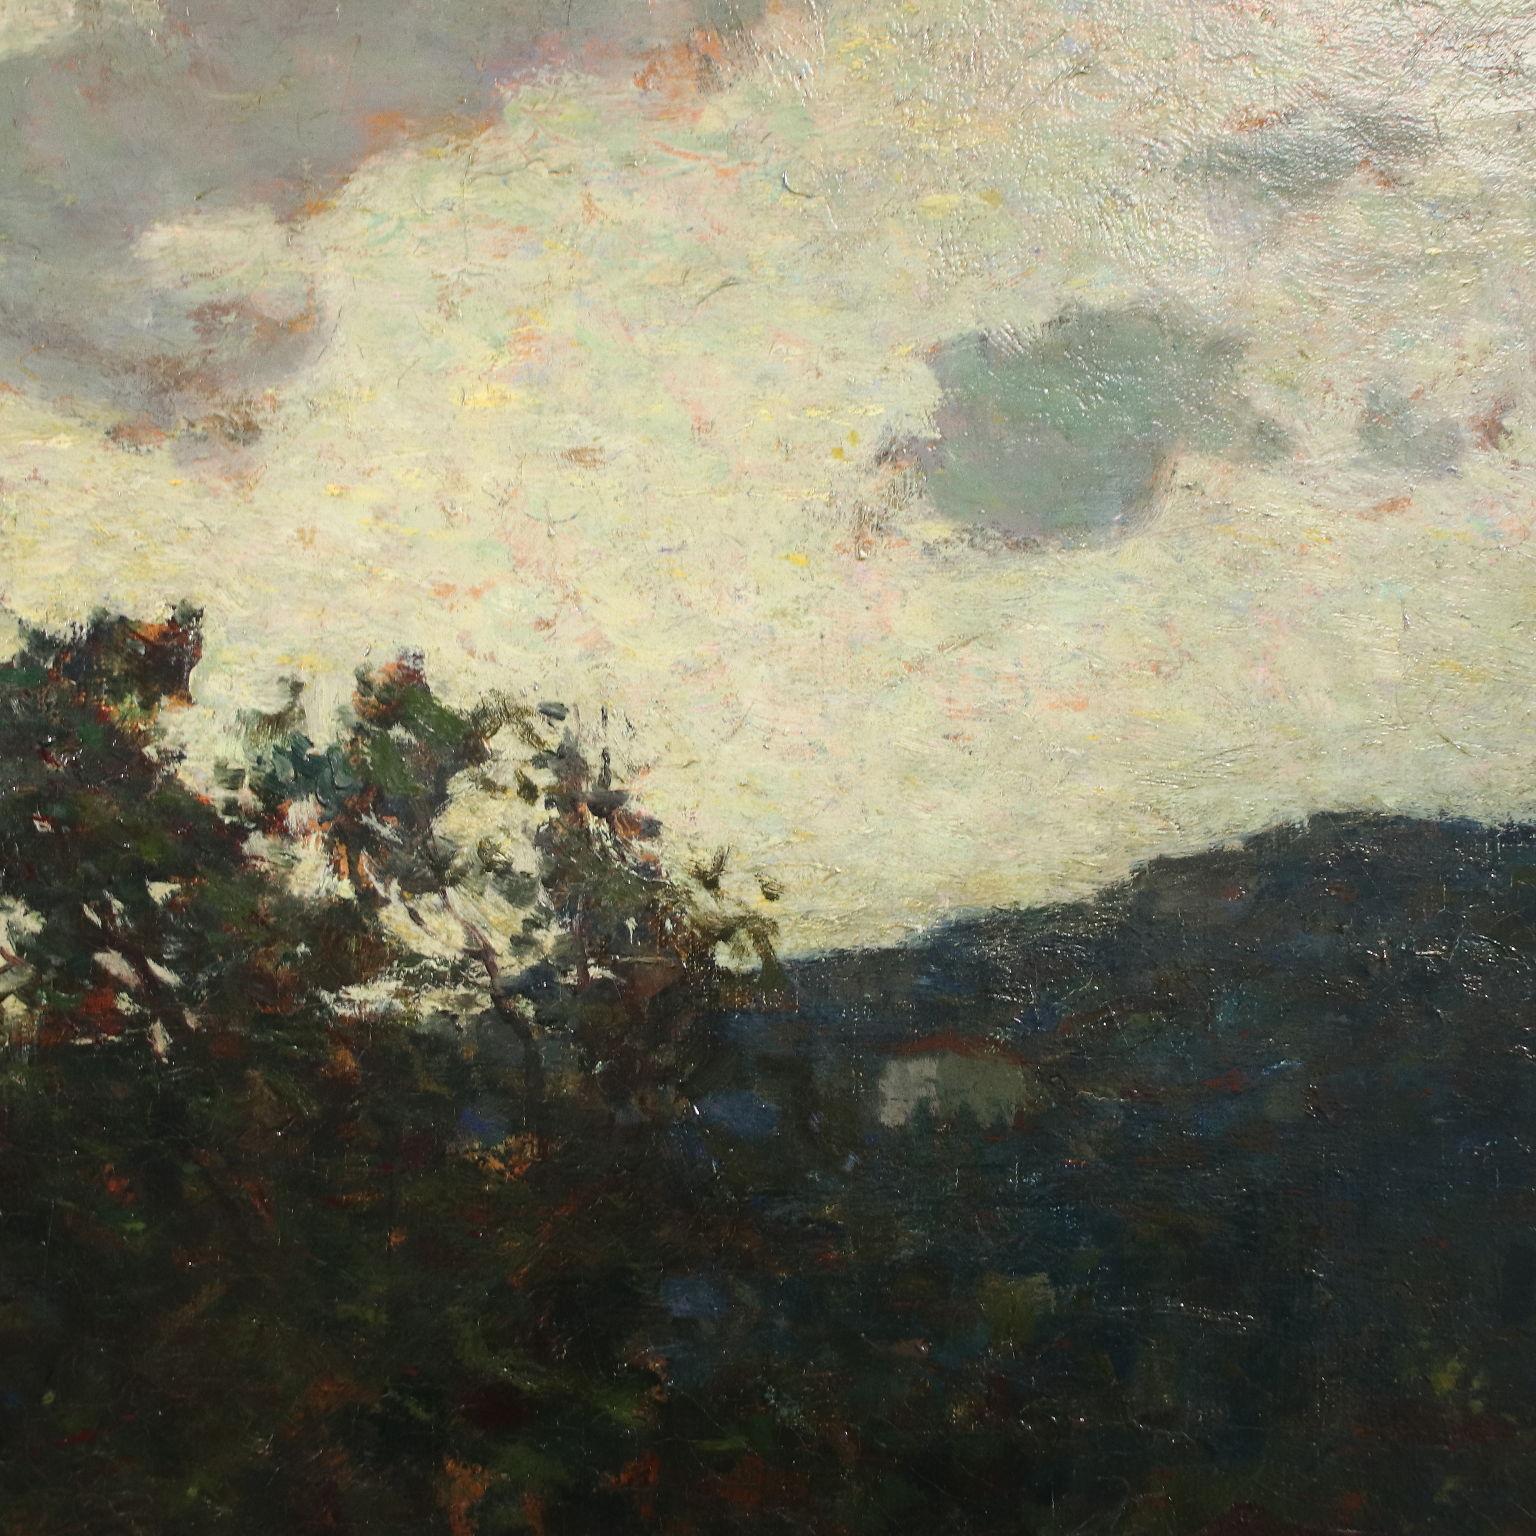 Brunate 1925 - Black Landscape Painting by Giorgio Belloni